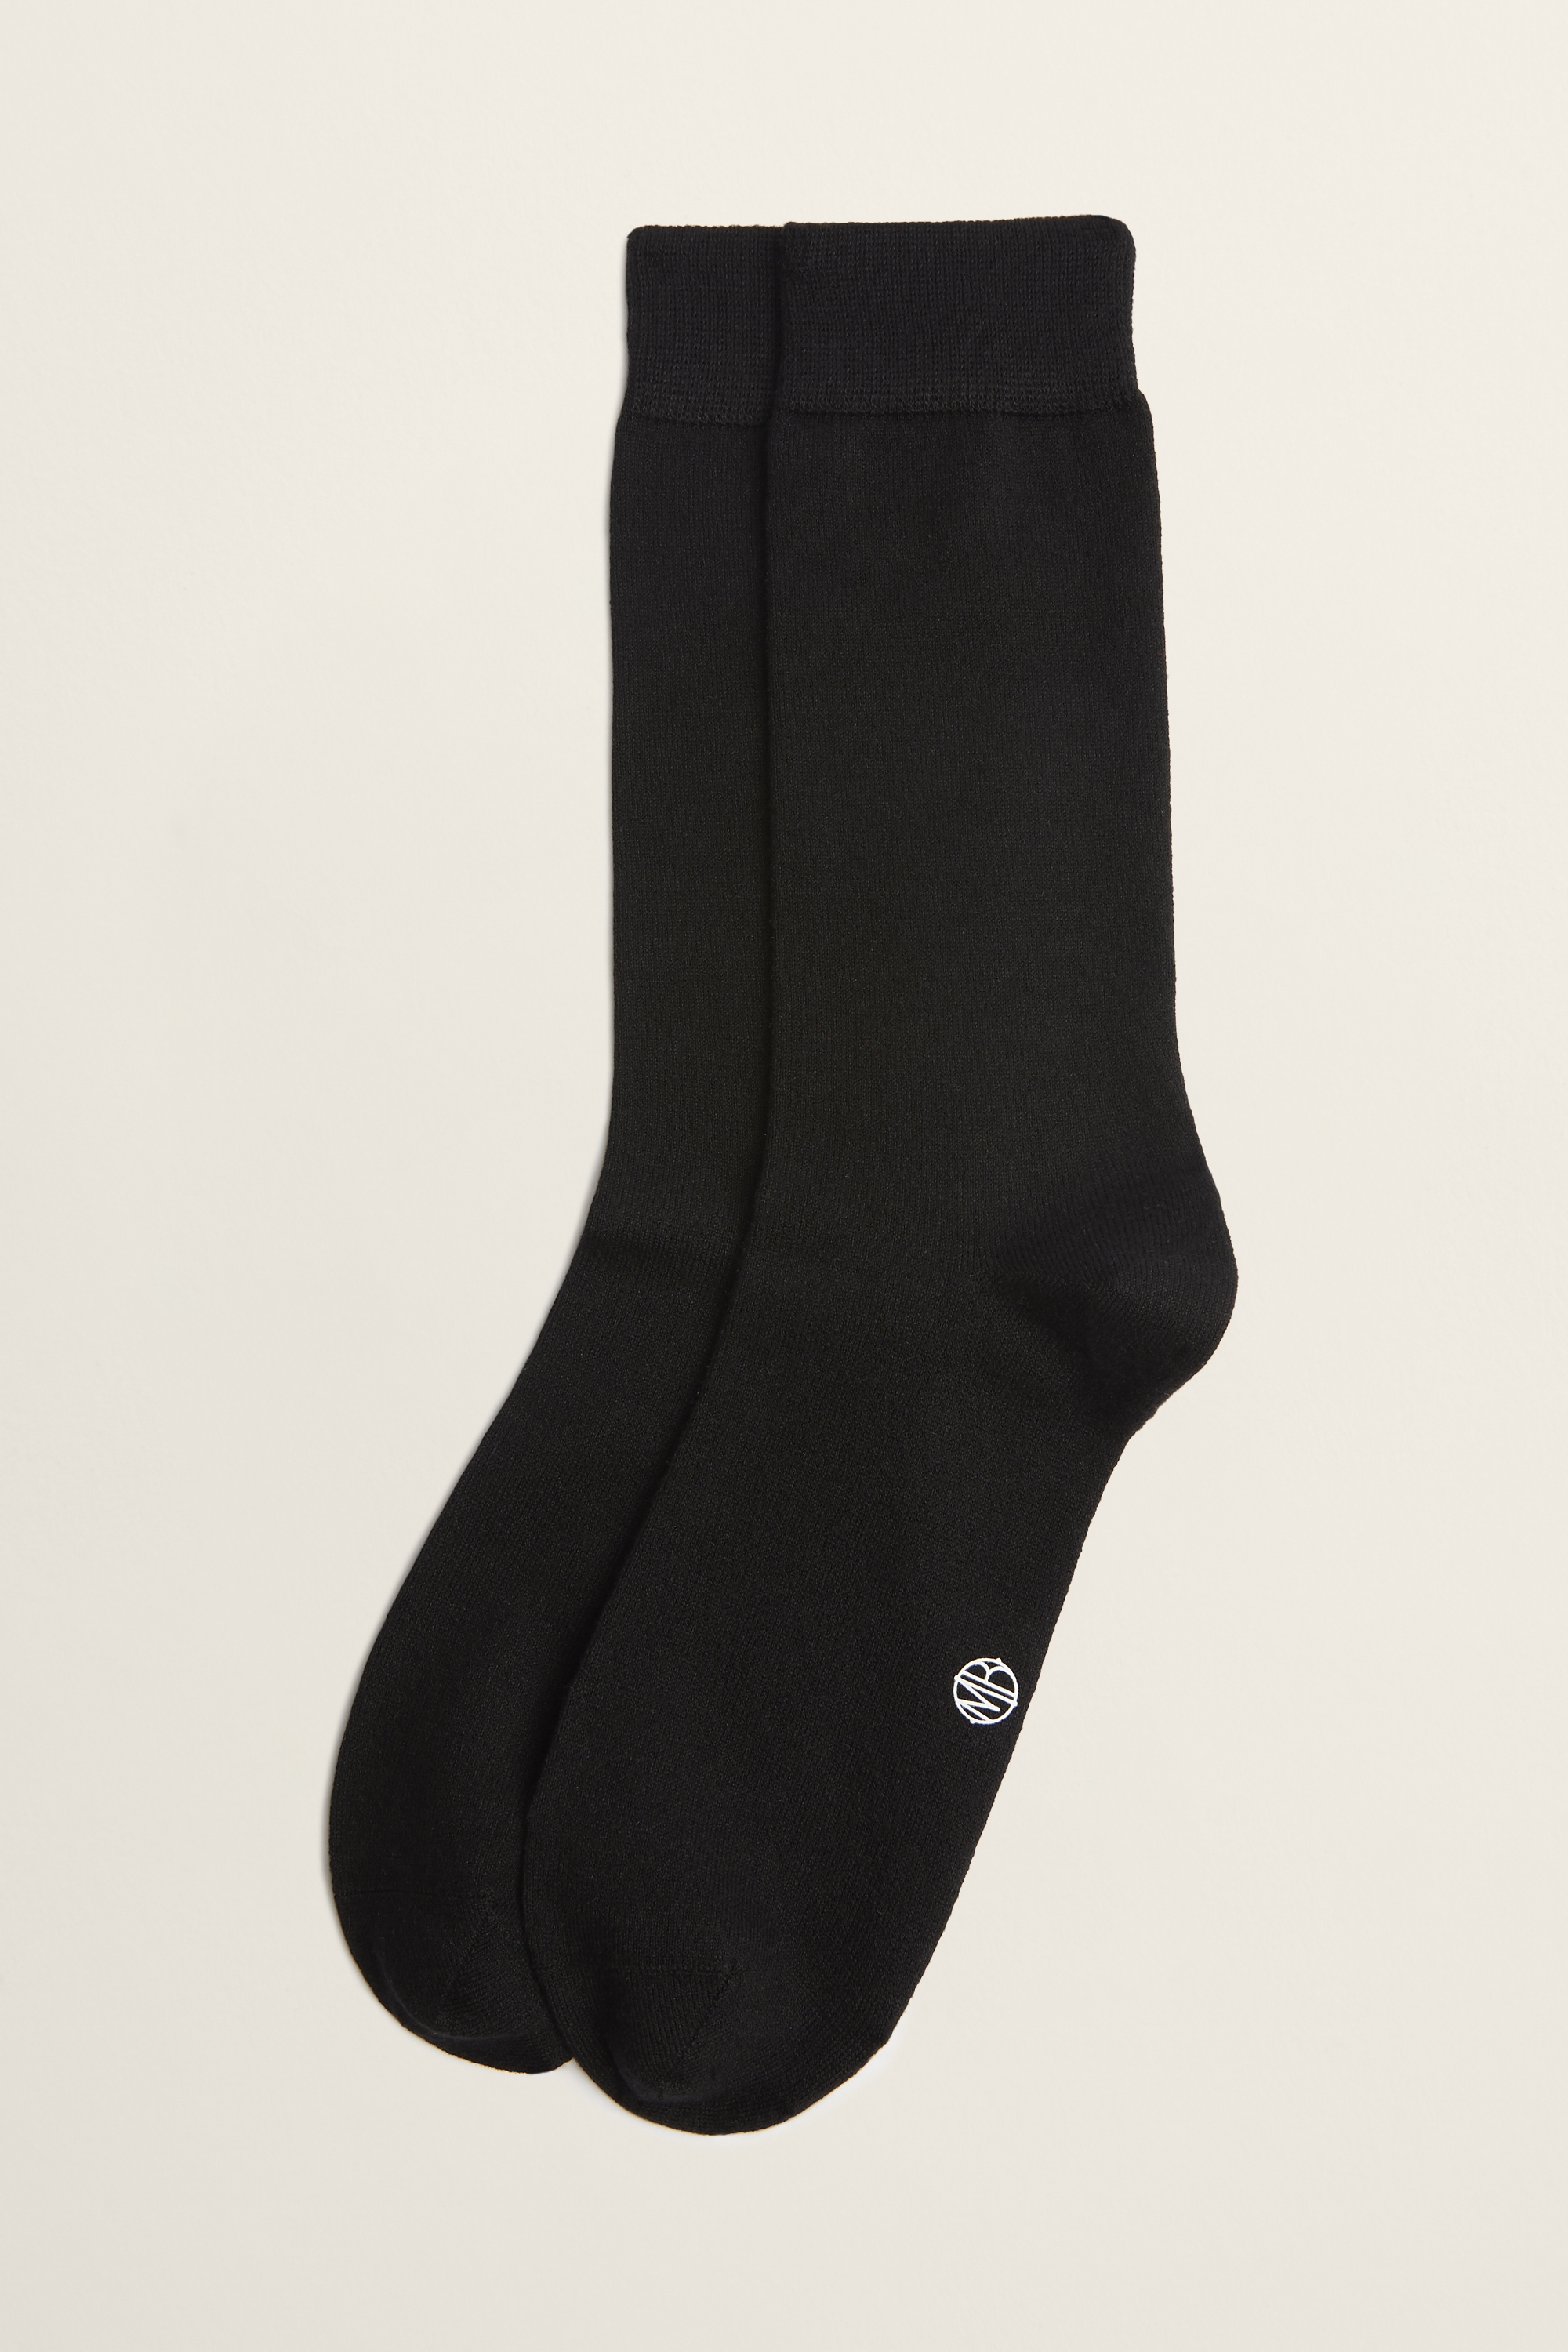 Black Silk Dress Socks | Buy Online at Moss